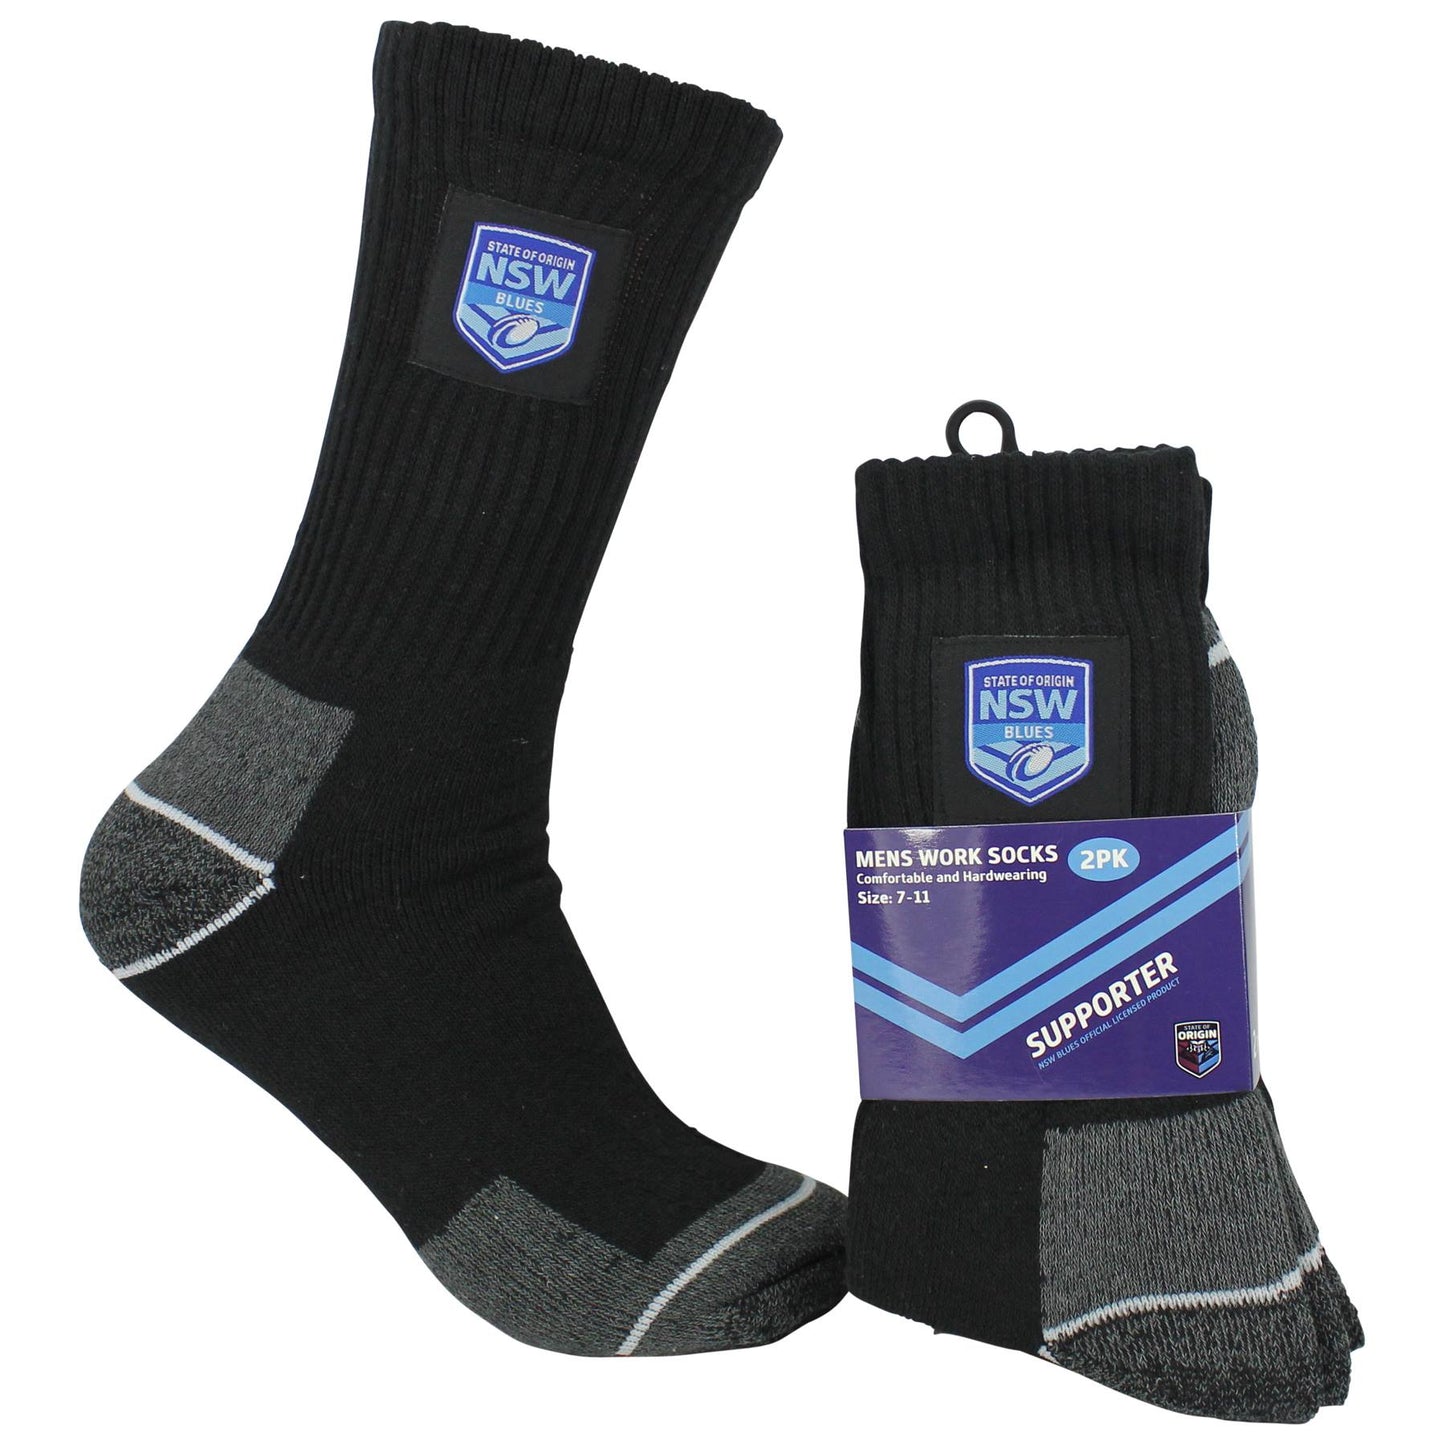 NSW Blues Work Socks